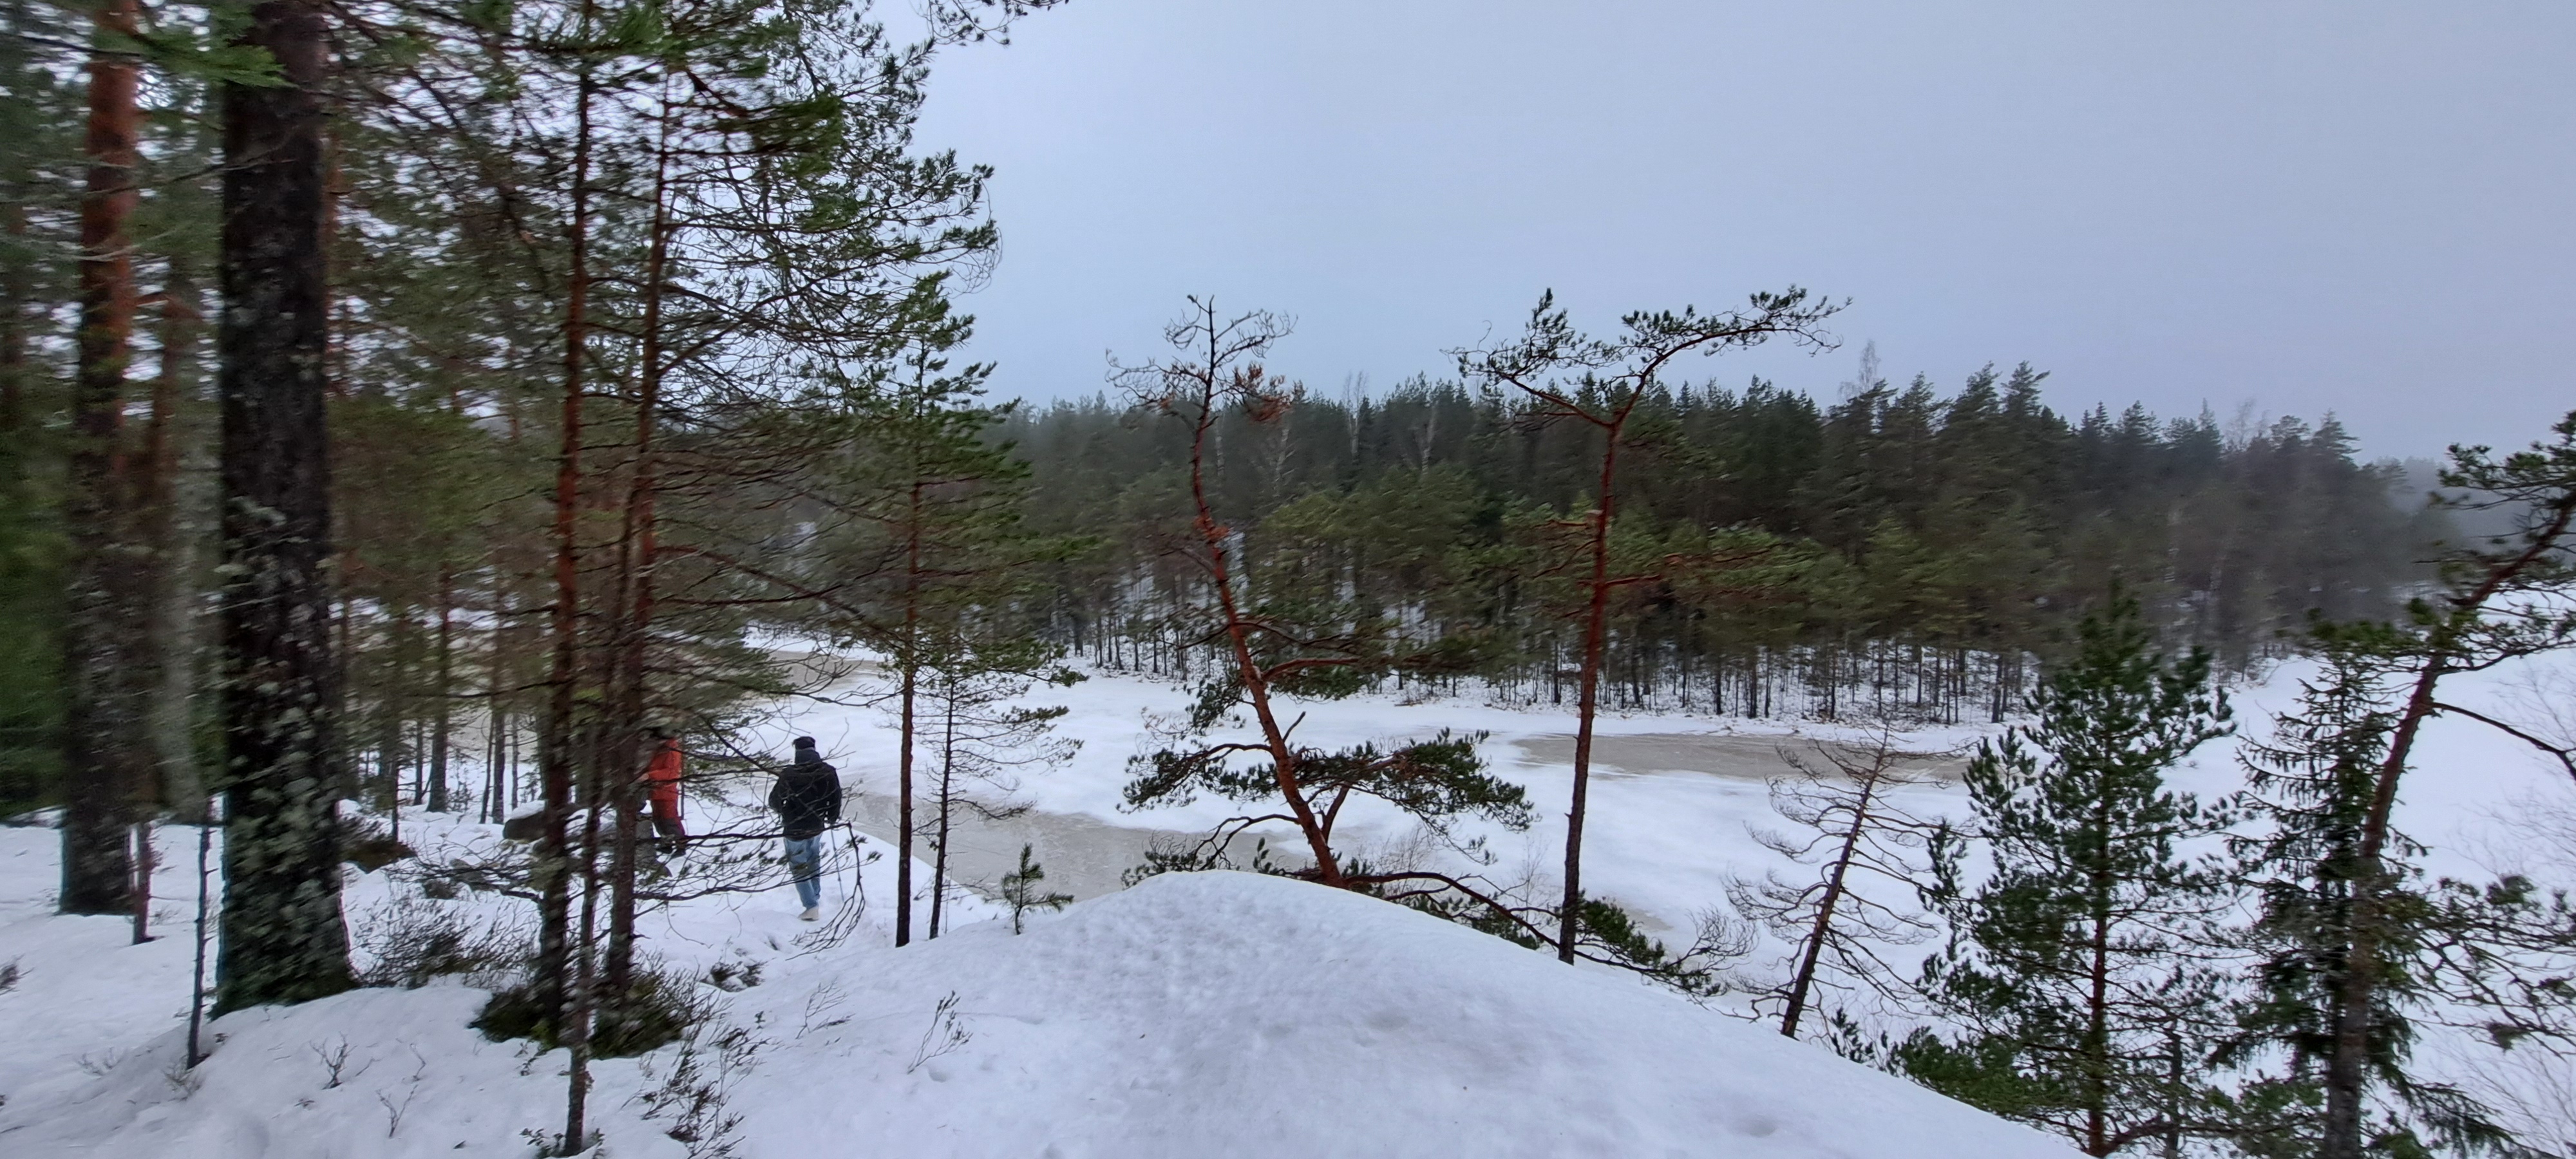 Sorlampi Nature Trail, Nuuskio National Park, Helsinki